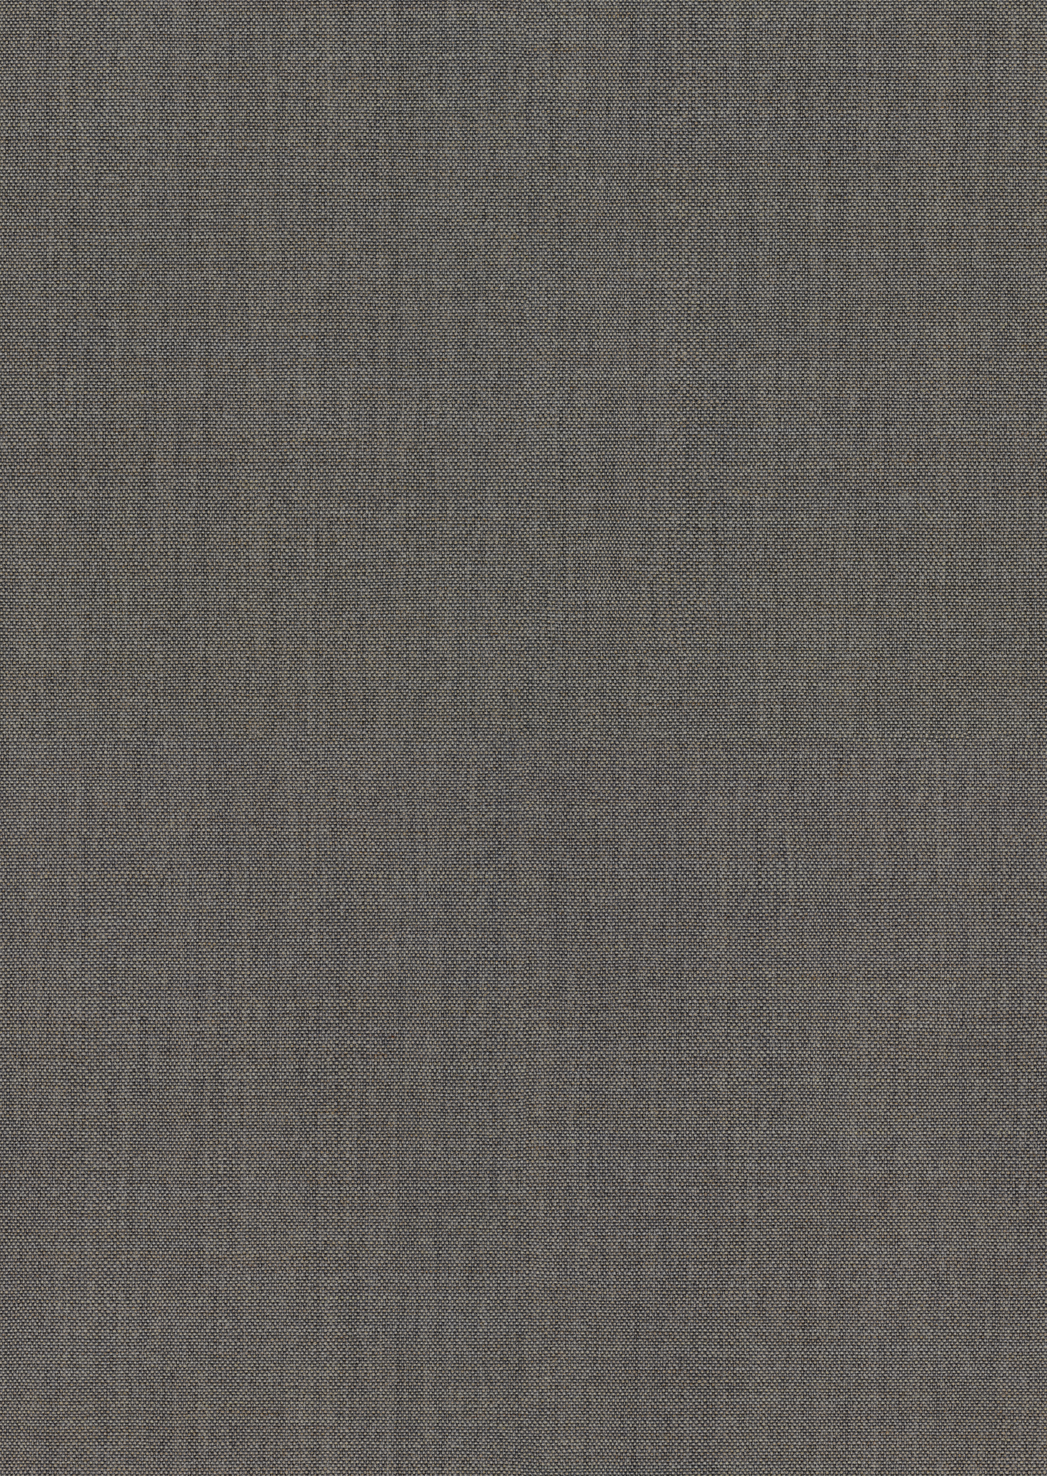 Fabric sample Remix 3 133 grey